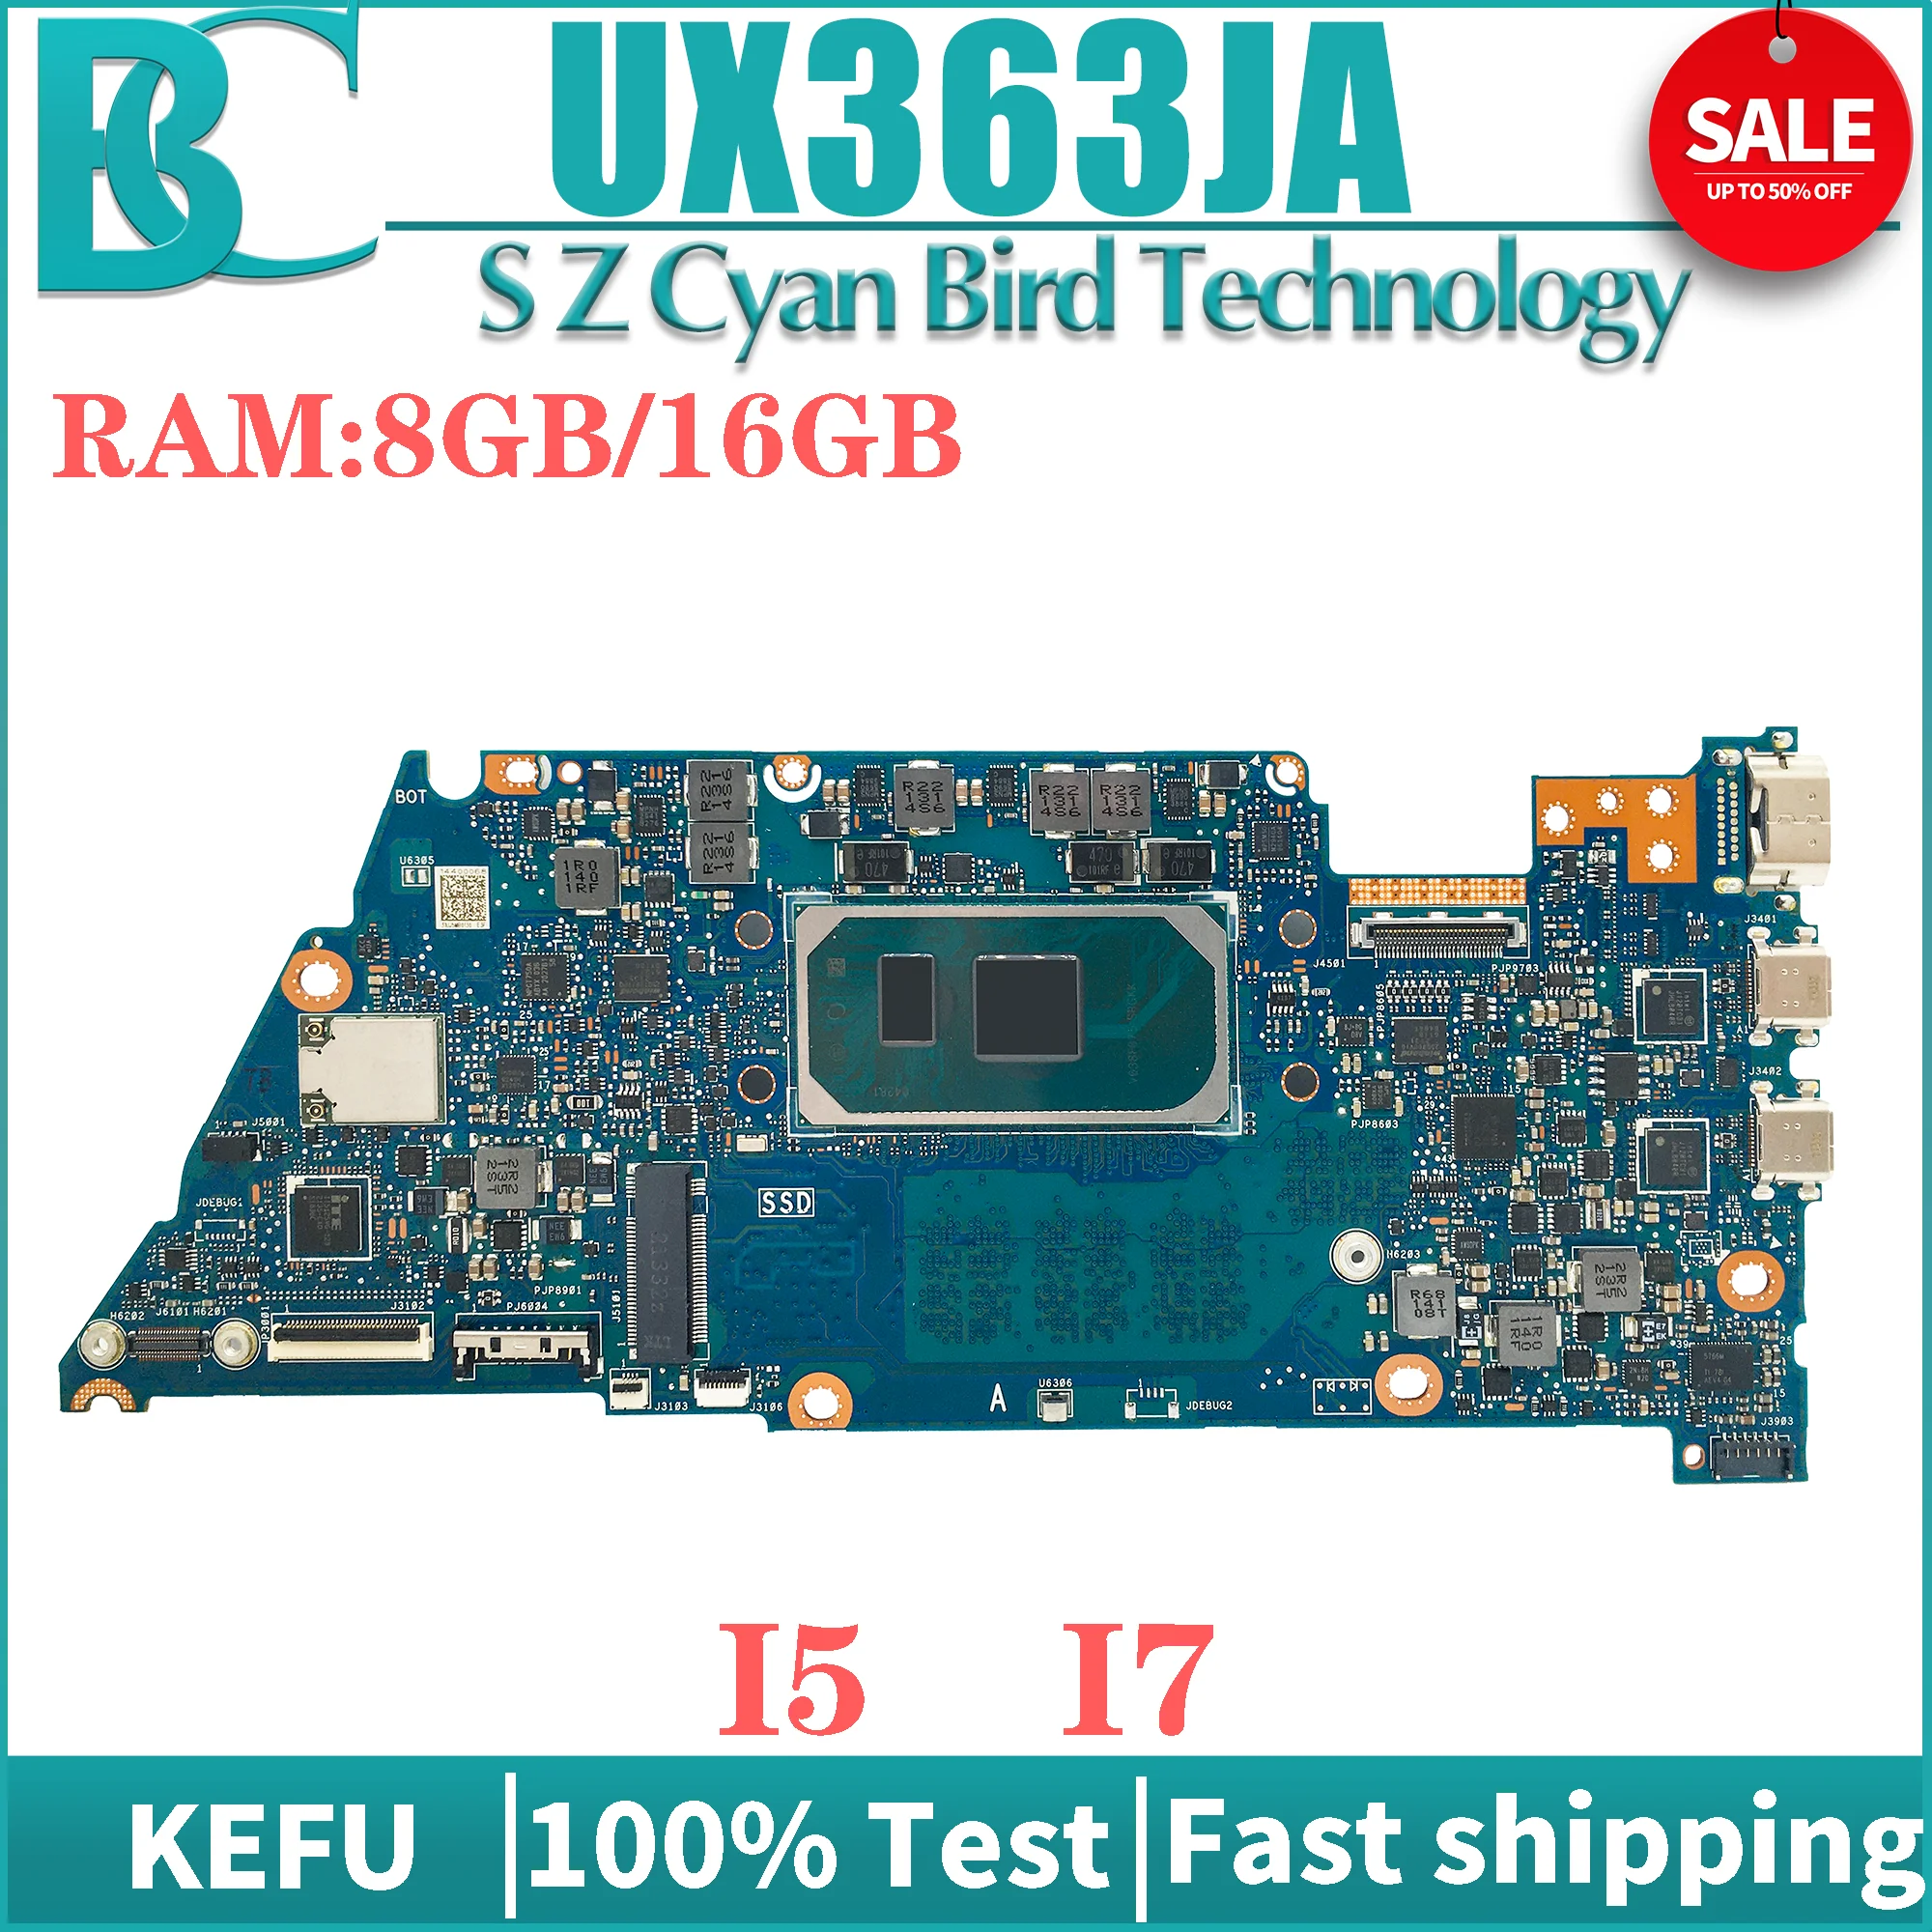 

KEFU UX363JA Mainboard I5 I7 10th Gen 8GB-RAM For ASUS Zenbook Flip 13 BX363JA RX363JA UX363 Laptop Motherboard